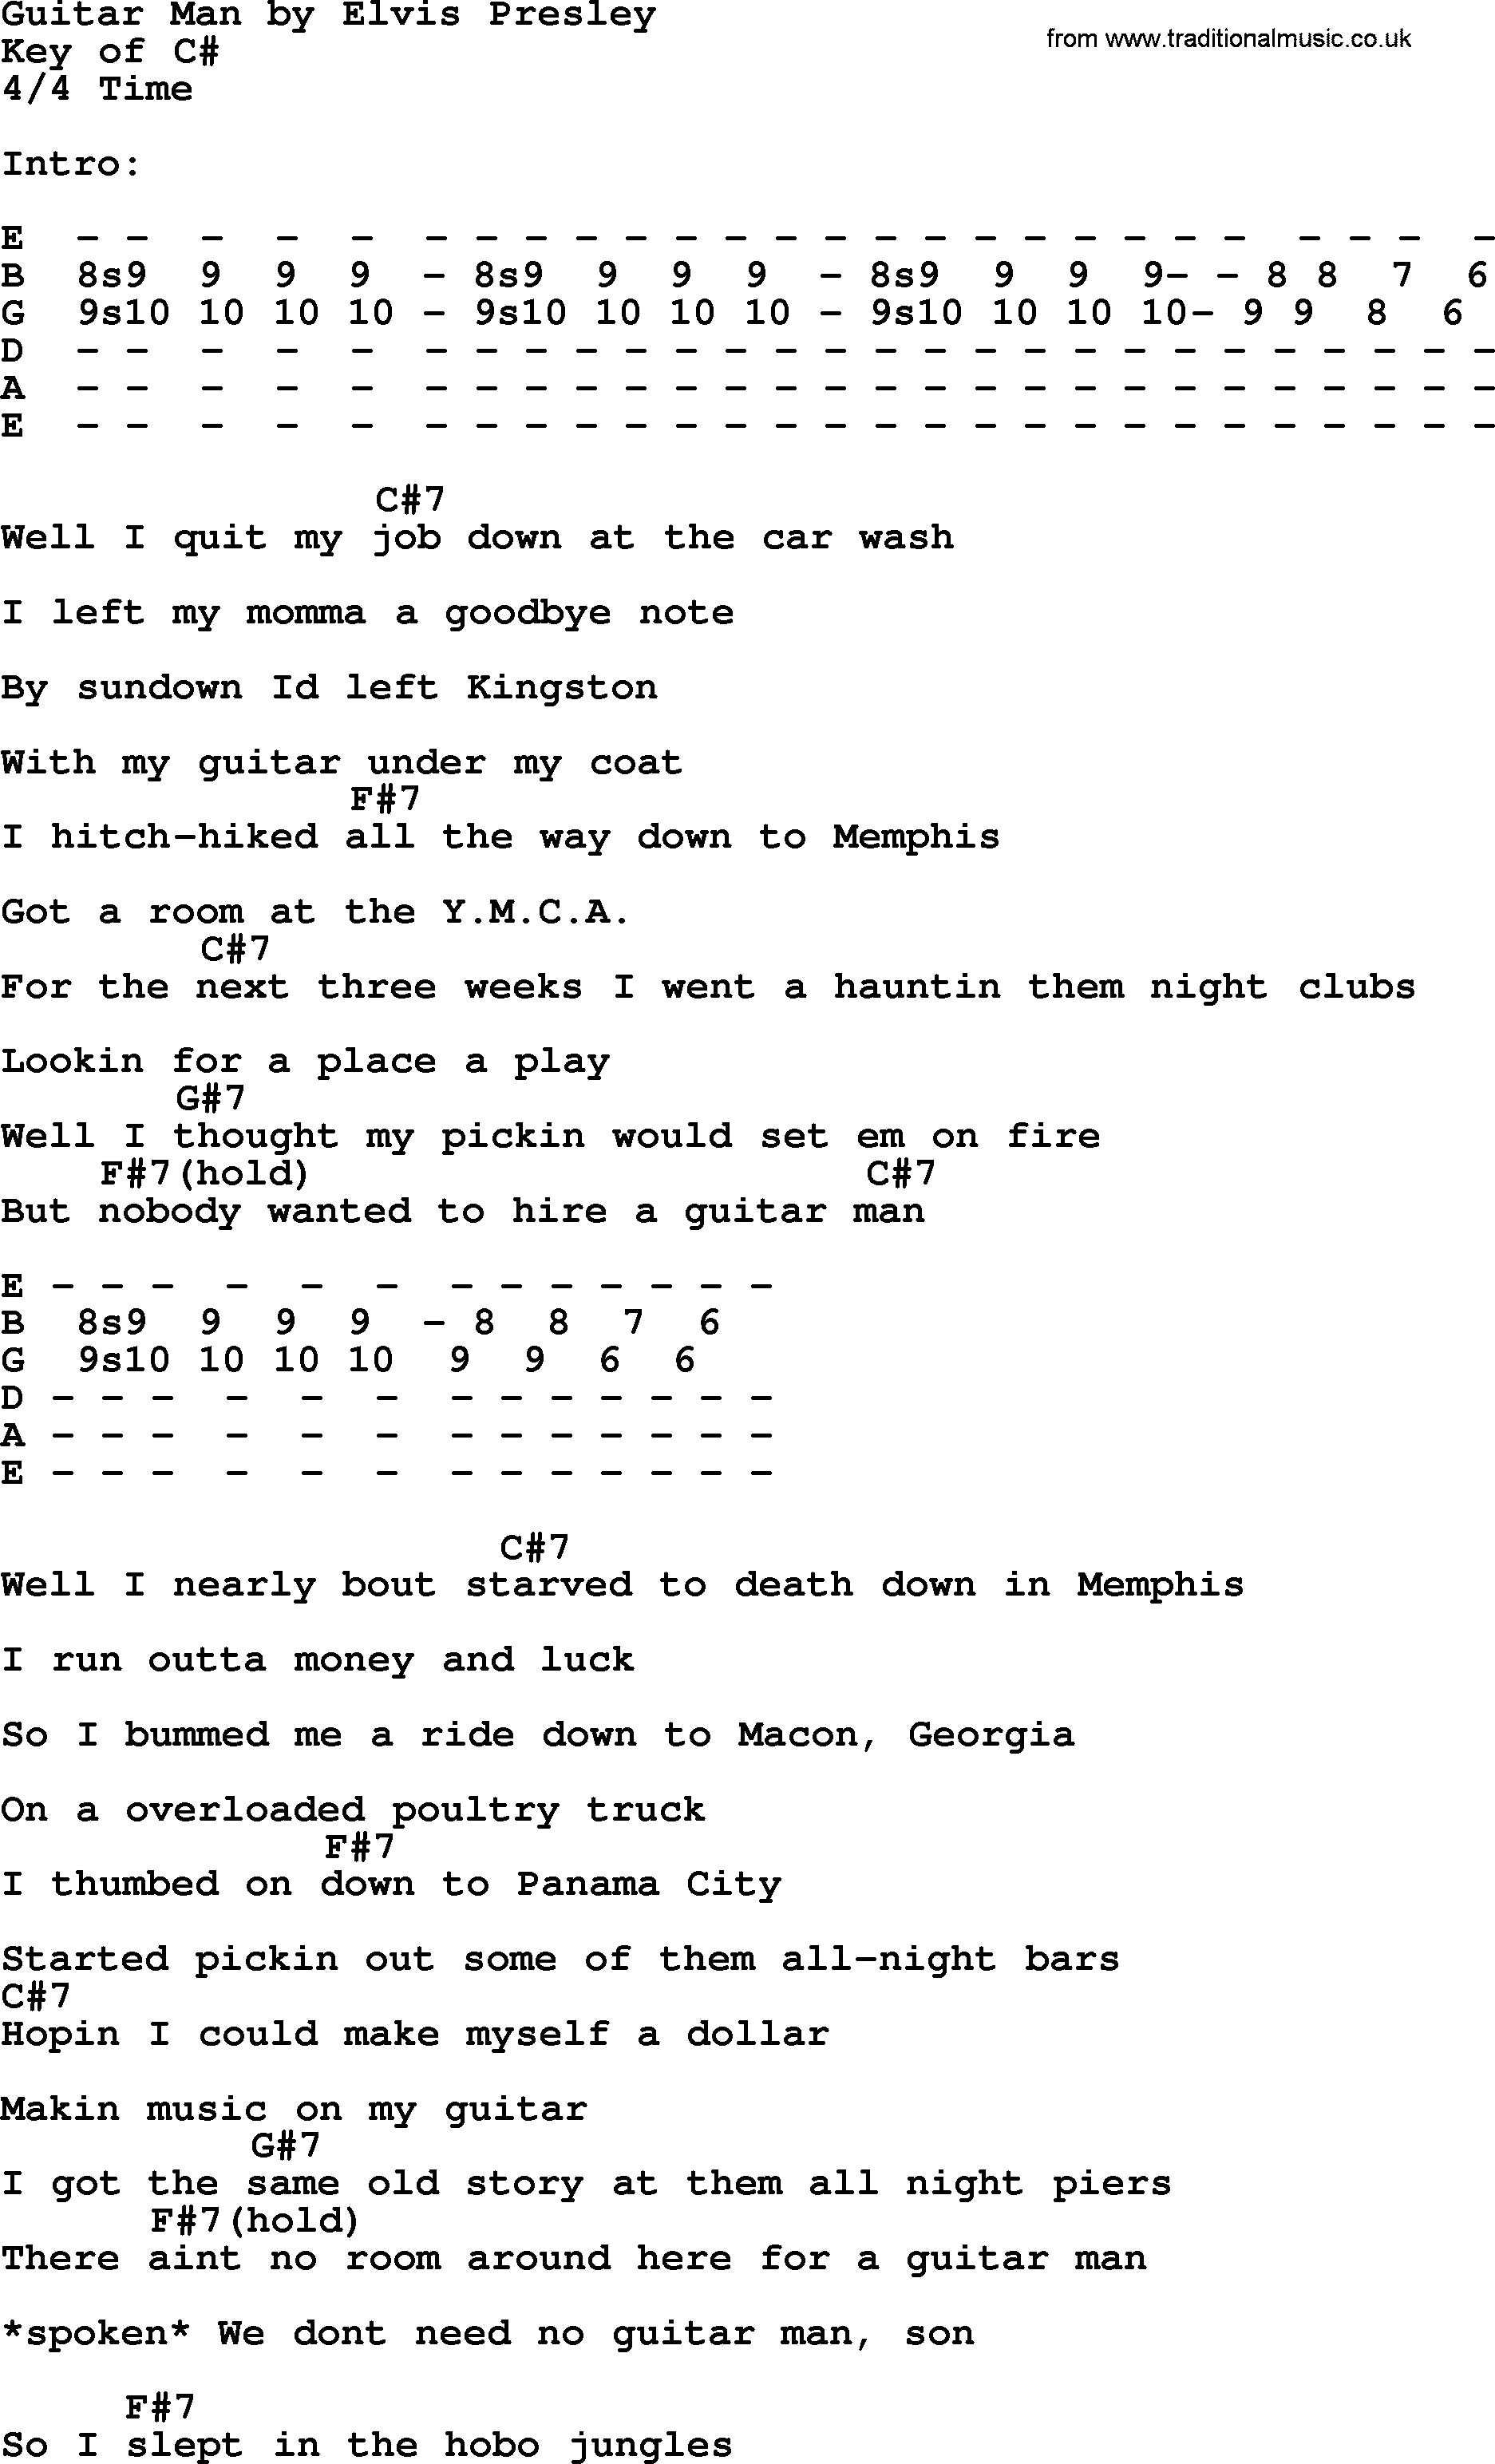 Elvis Presley song: Guitar Man, lyrics and chords